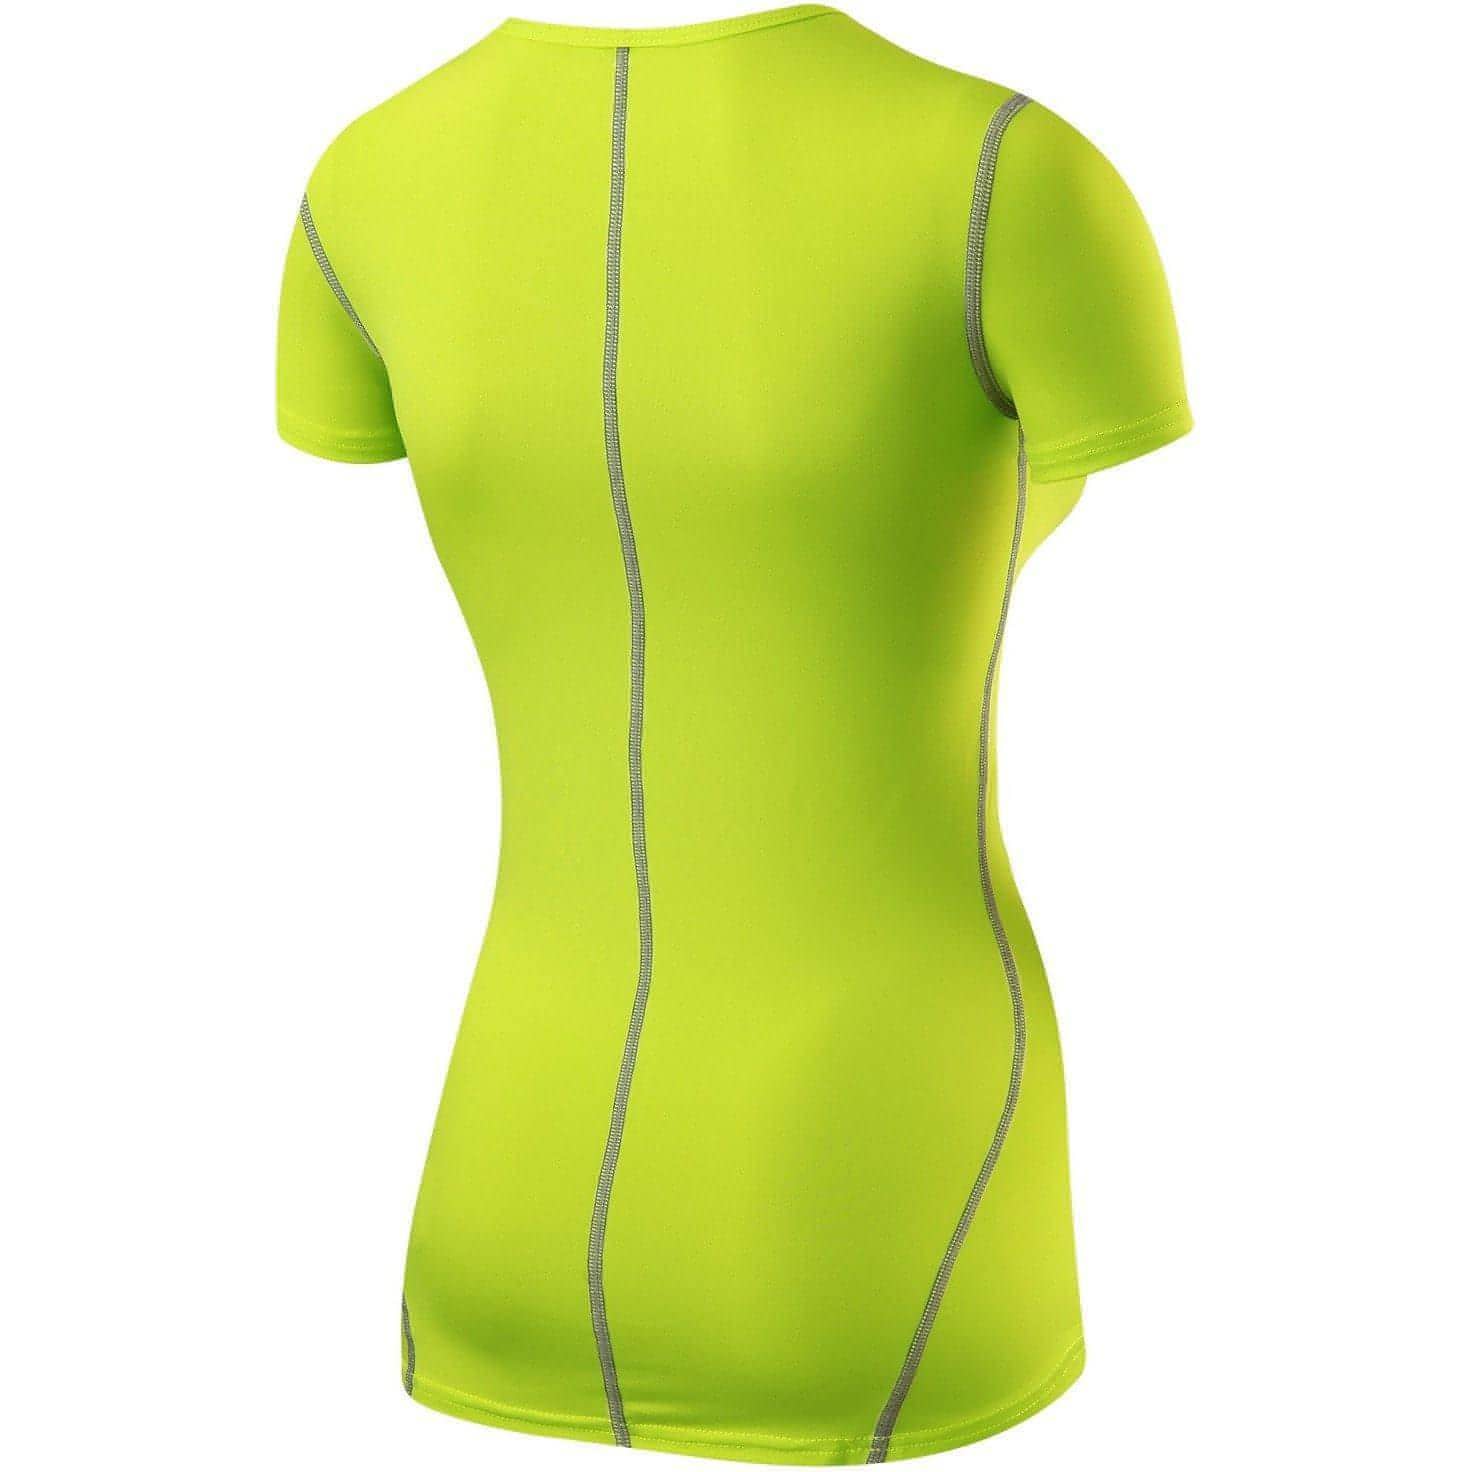 TCA Pro Performance Womens Short Sleeve Baselayer Running Top - Green - Start Fitness